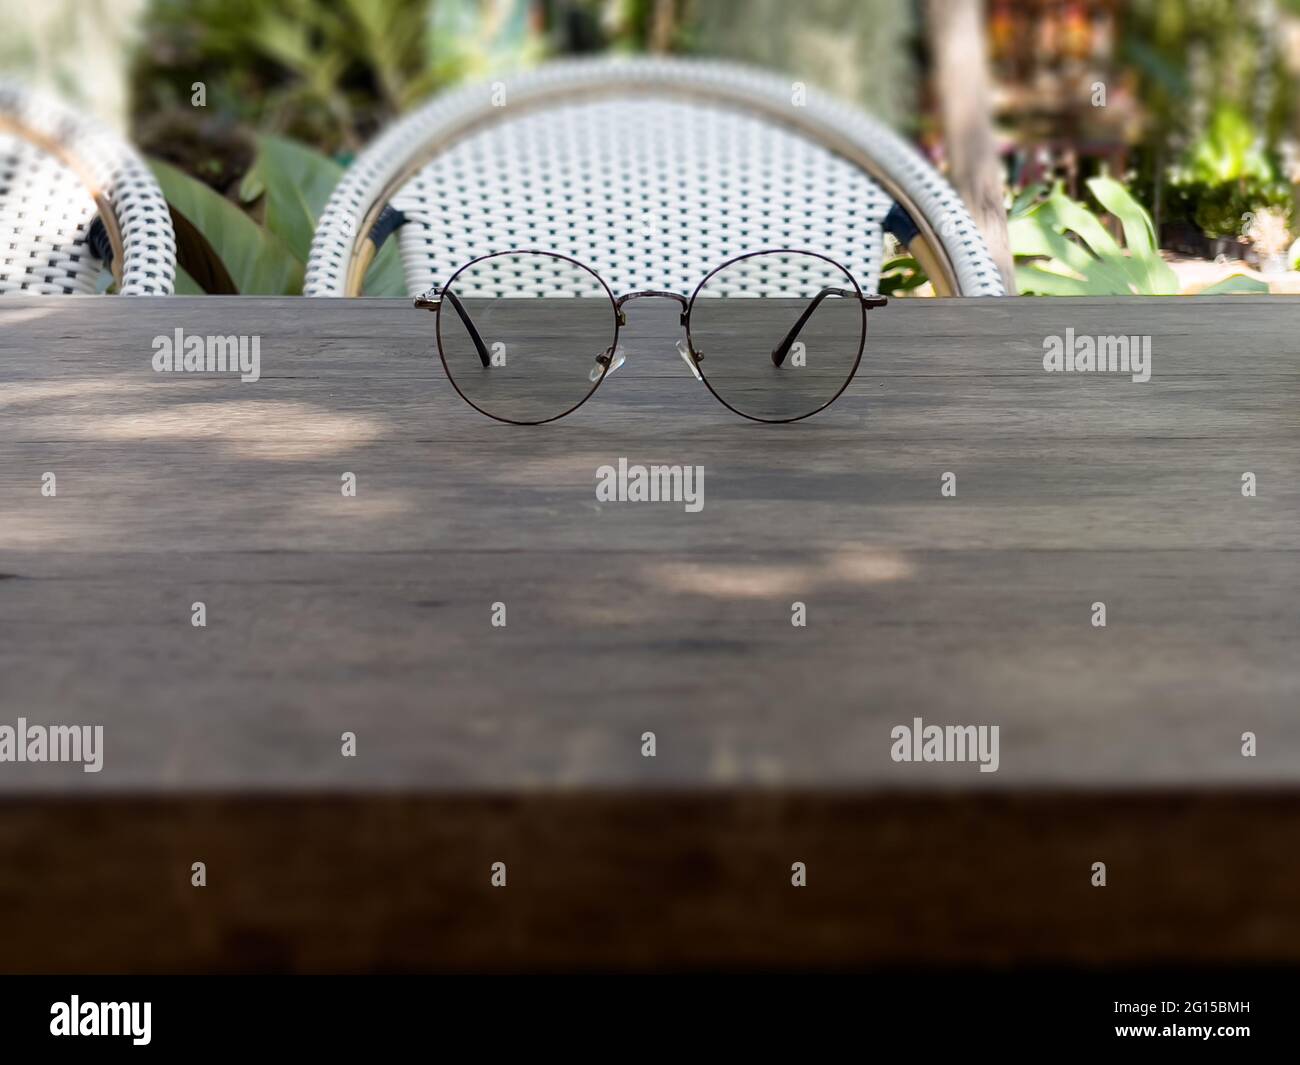 Eyeglasses on old wooden table, stock photo Stock Photo